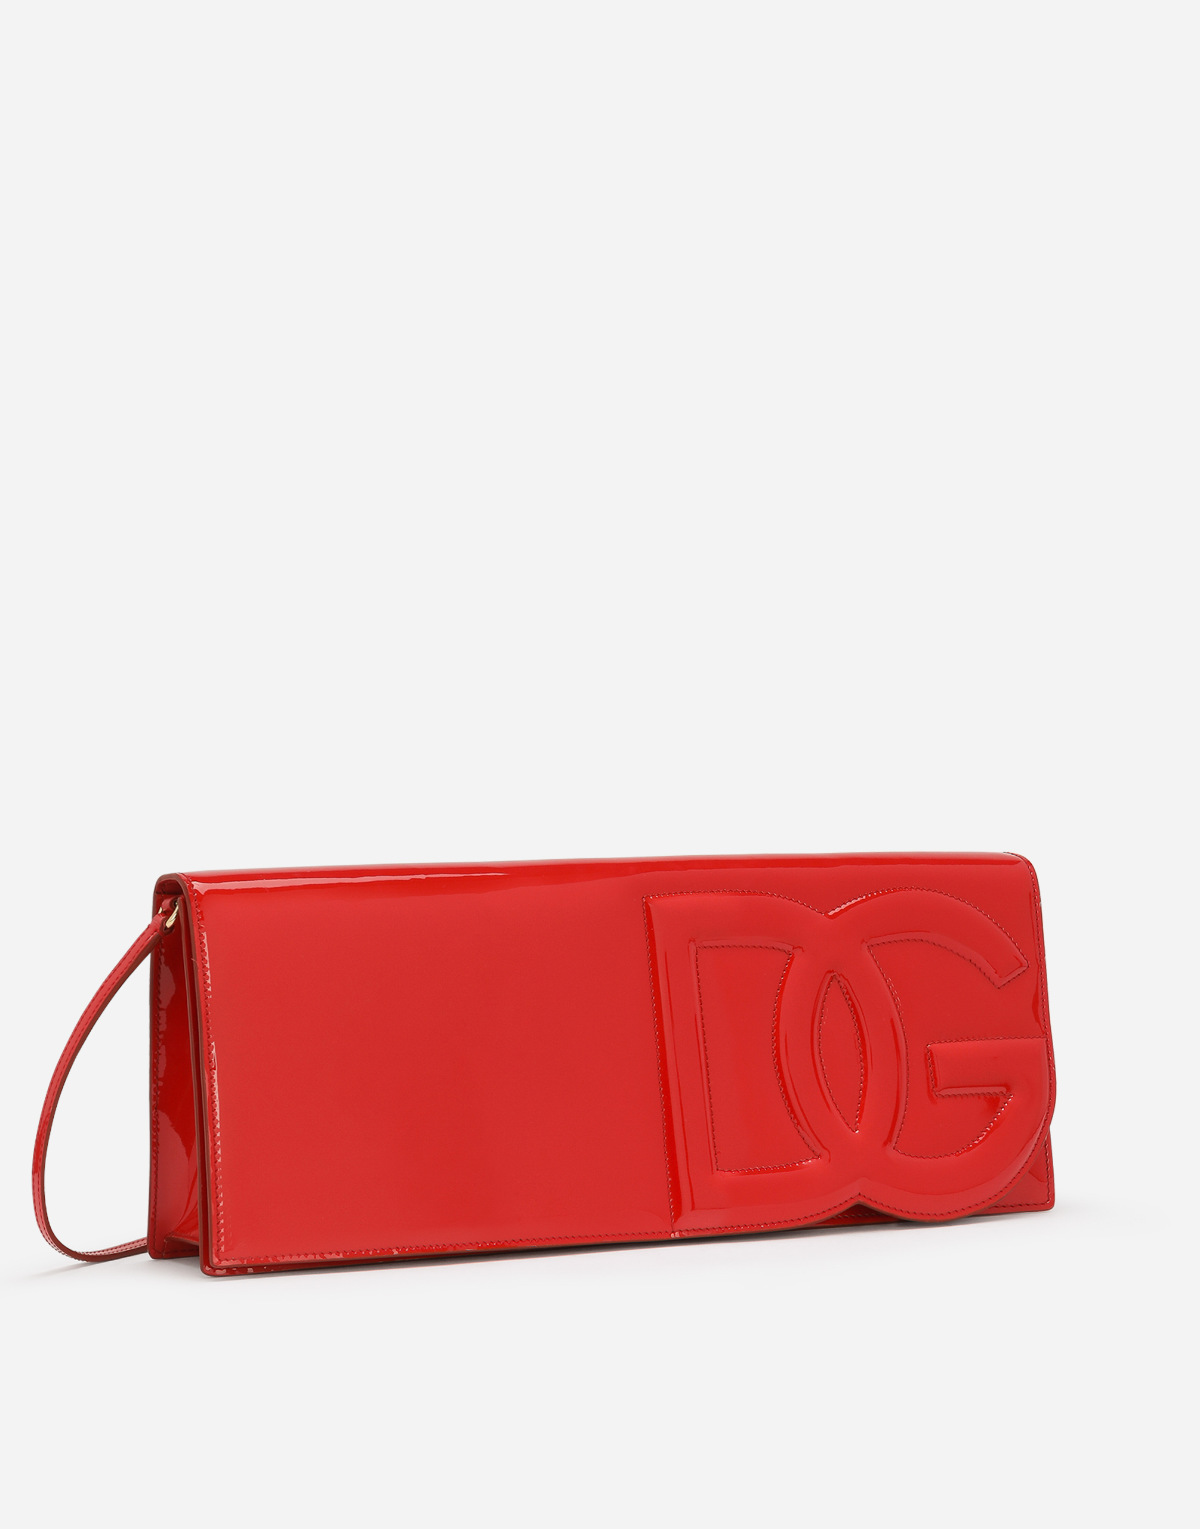 Dolce&Gabbana Presents Its New DG Logo Bag